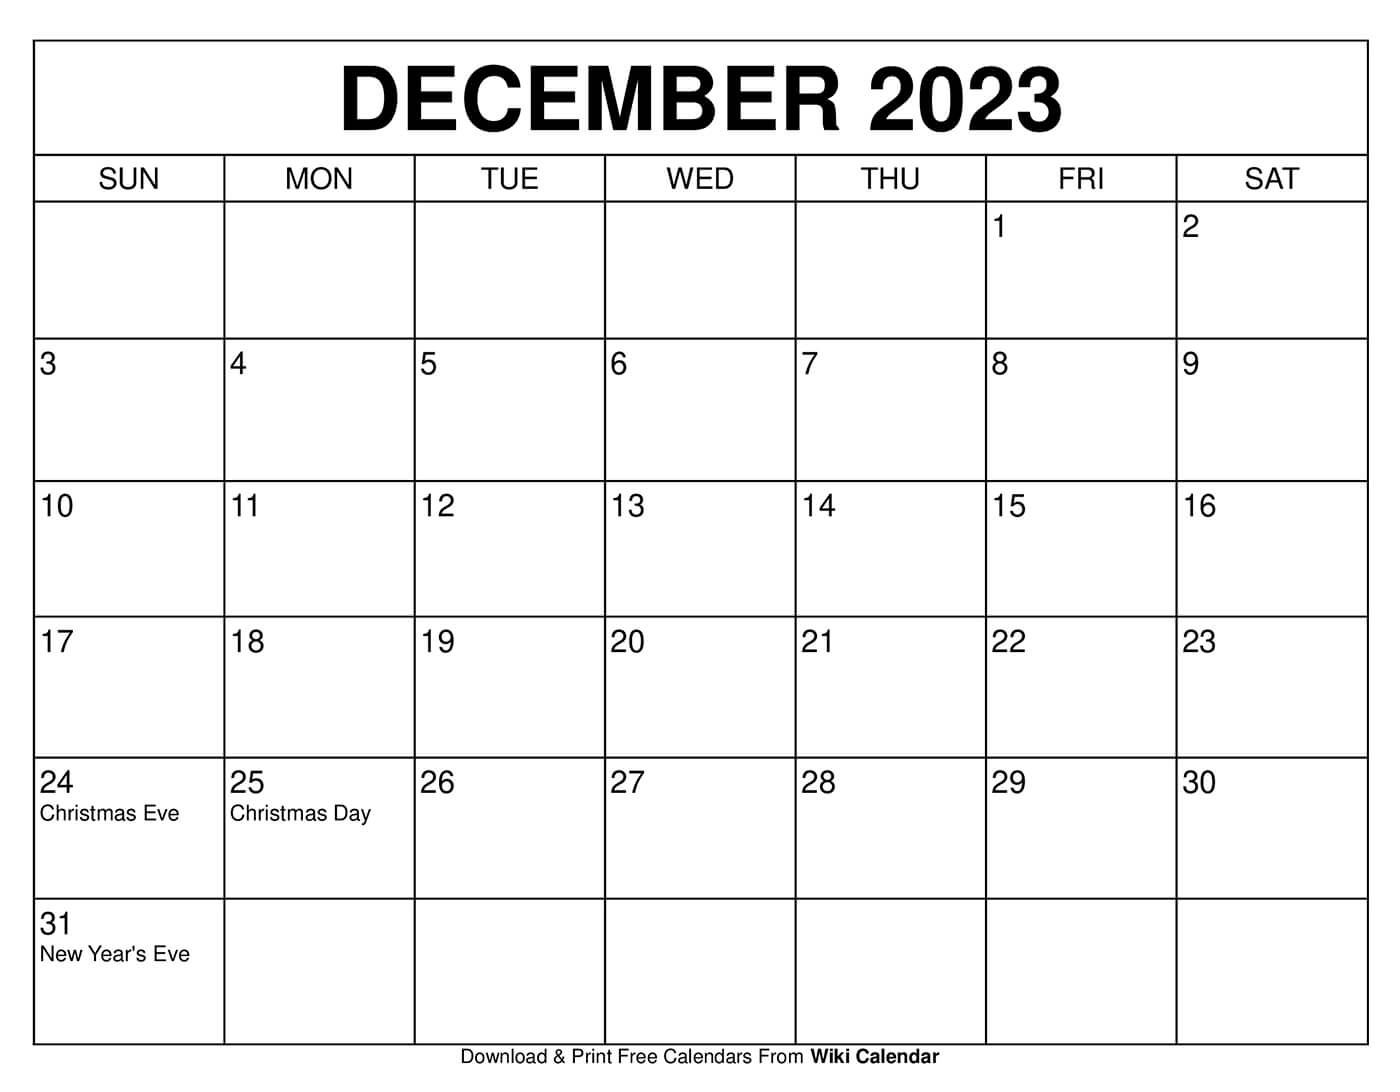 printable-december-2023-calendar-templates-with-holidays-wiki-calendar